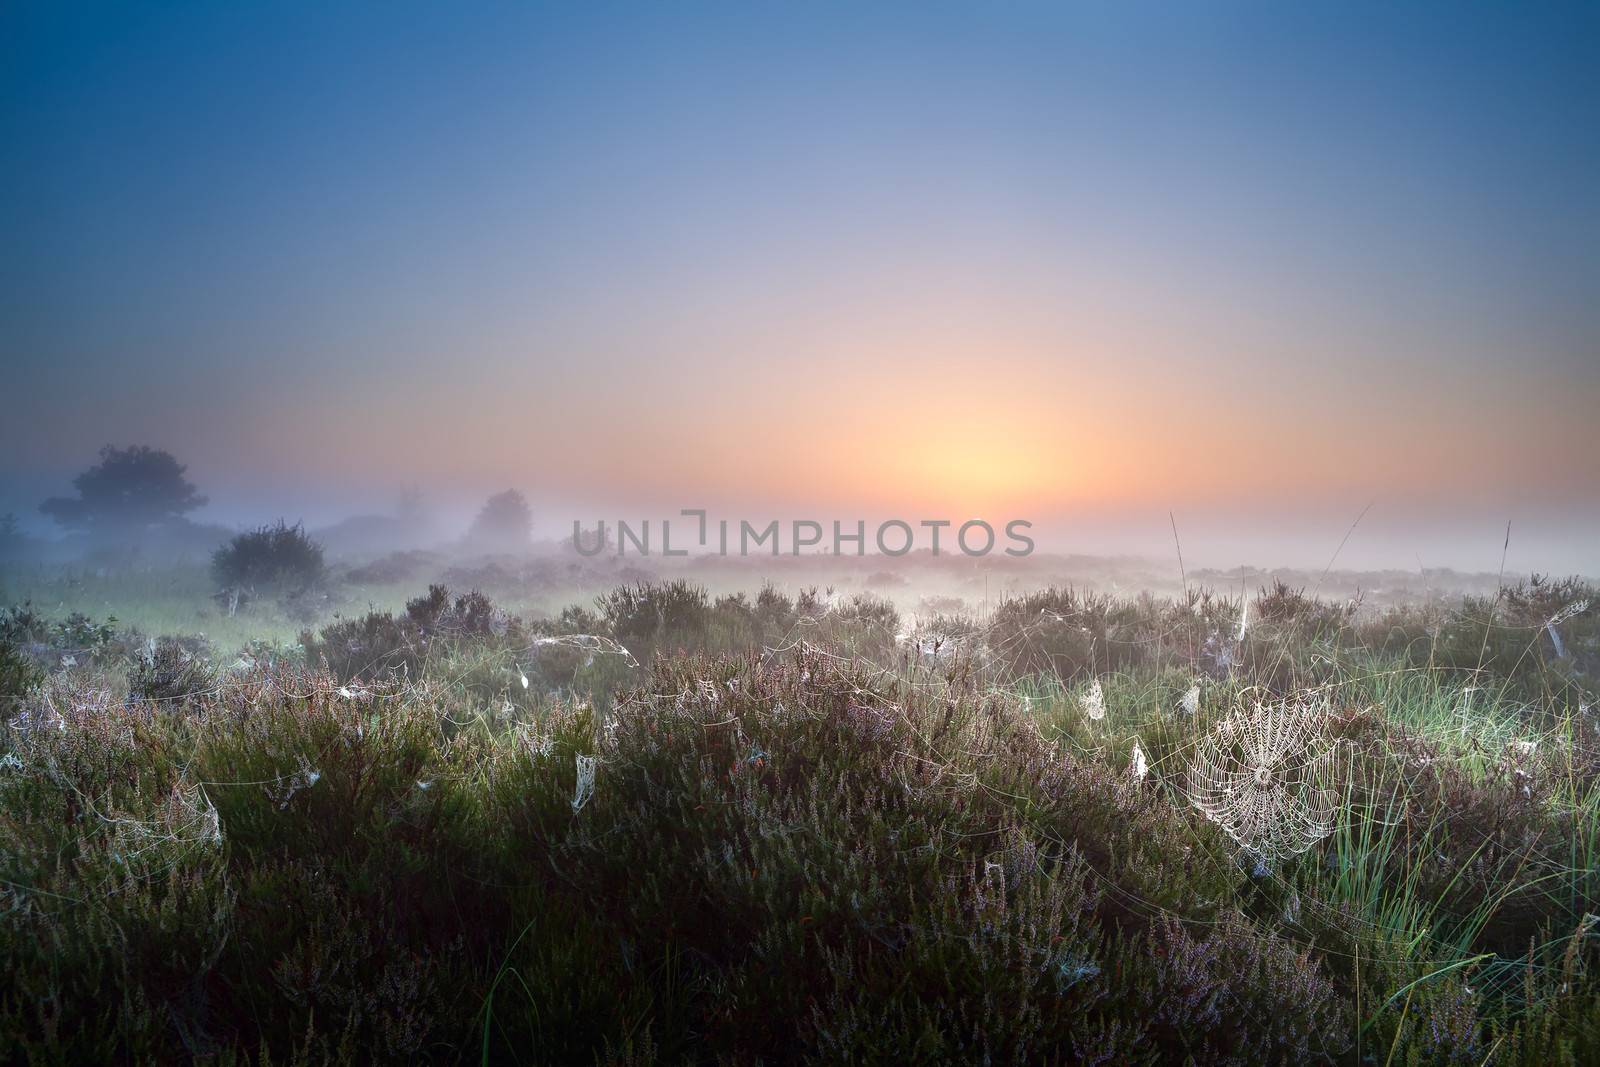 misty summer sunrise over heather meadows, Fochteloerveen, Drenthe, Netherlands